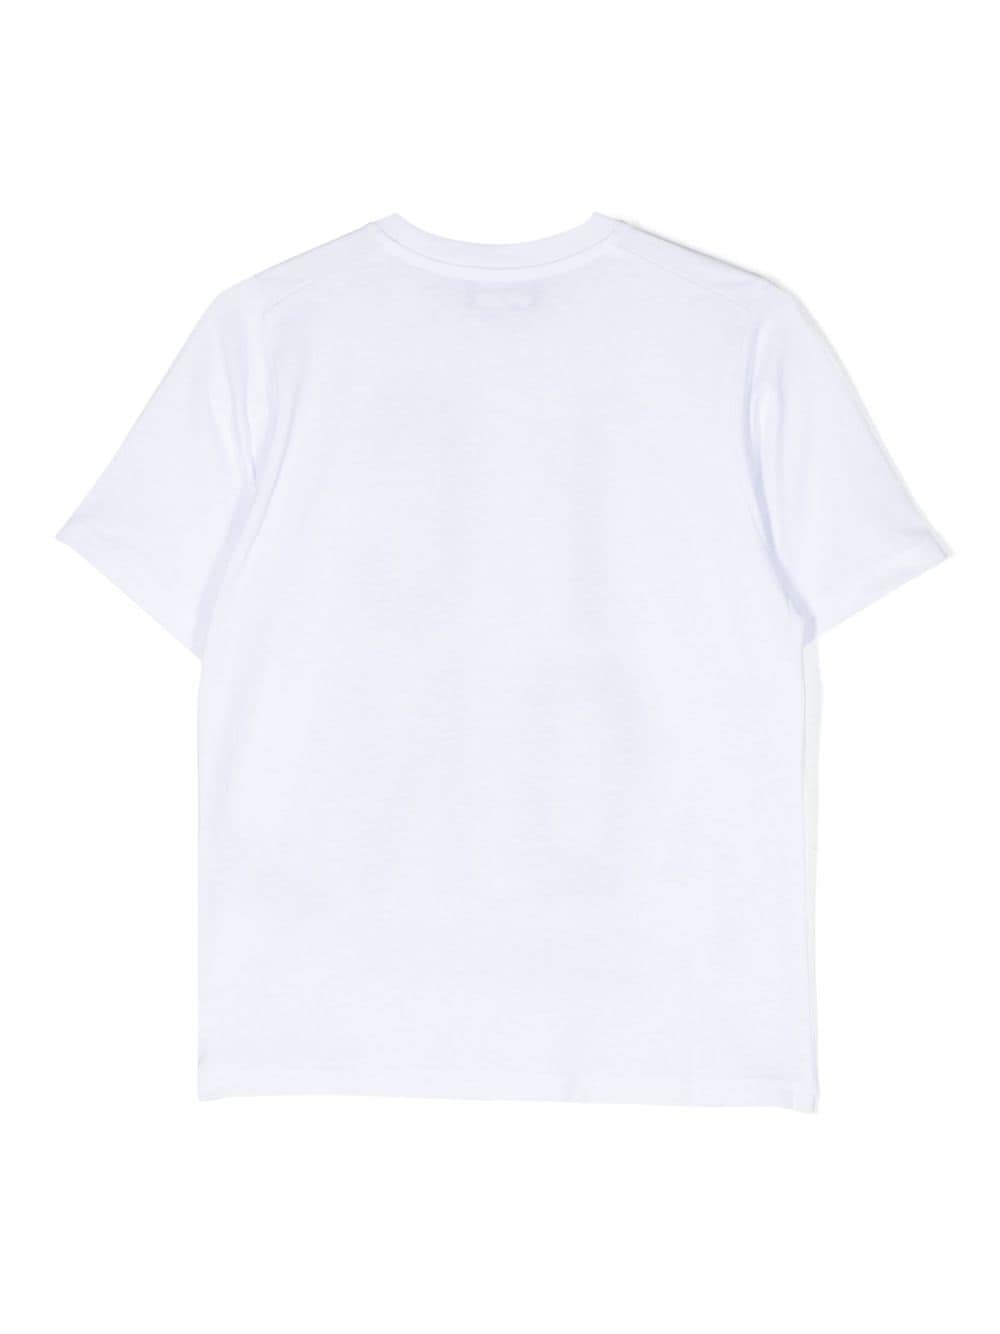 T-shirt bianca per bambino con logo ICON